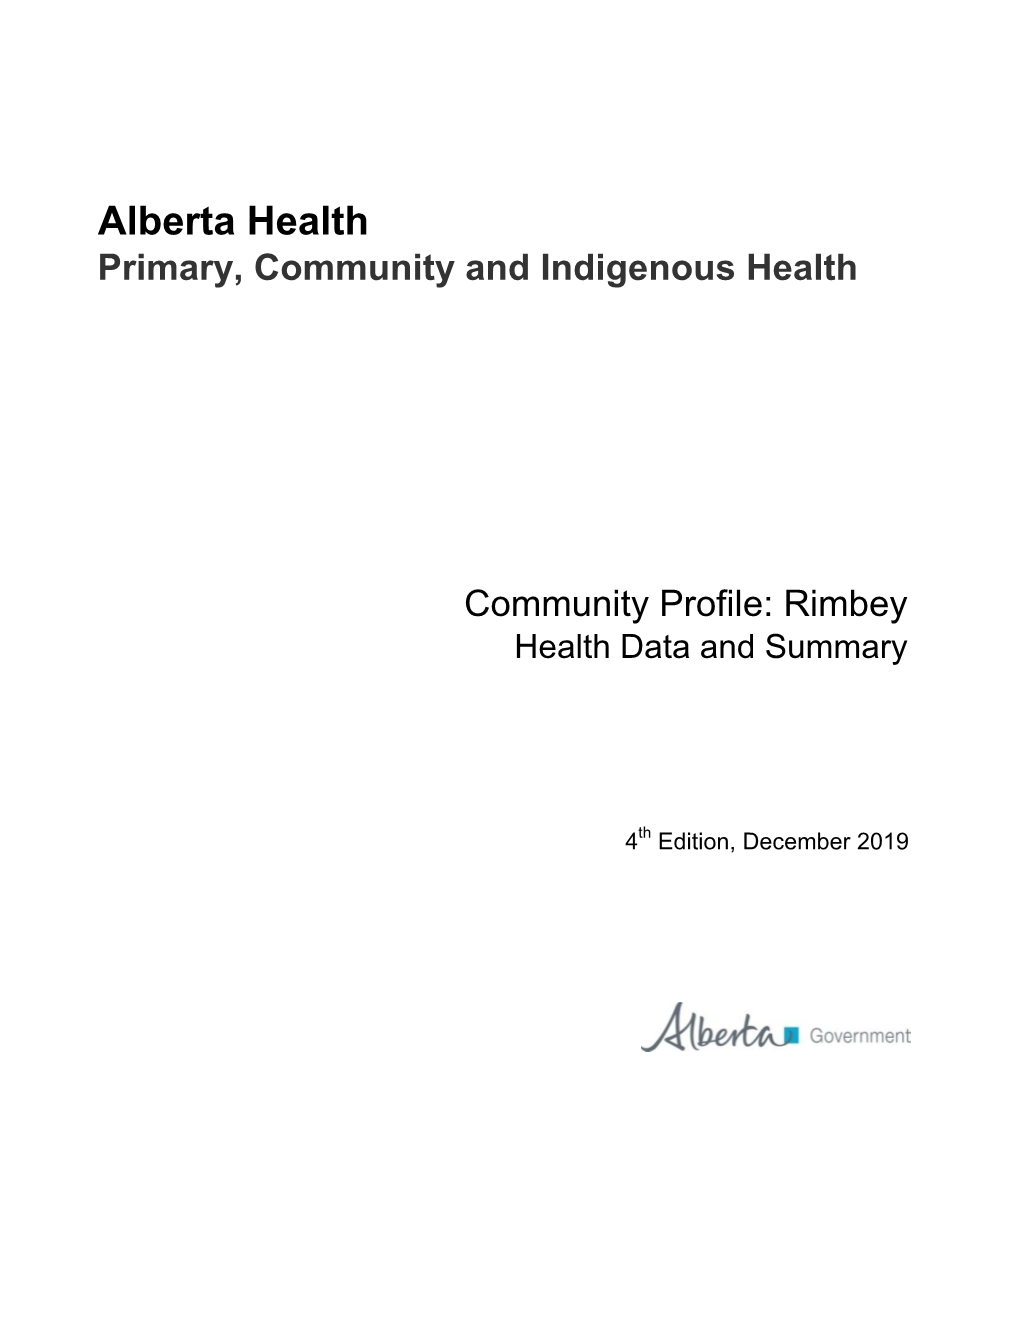 Community Profile: Rimbey Health Data and Summary. 4Th Edition